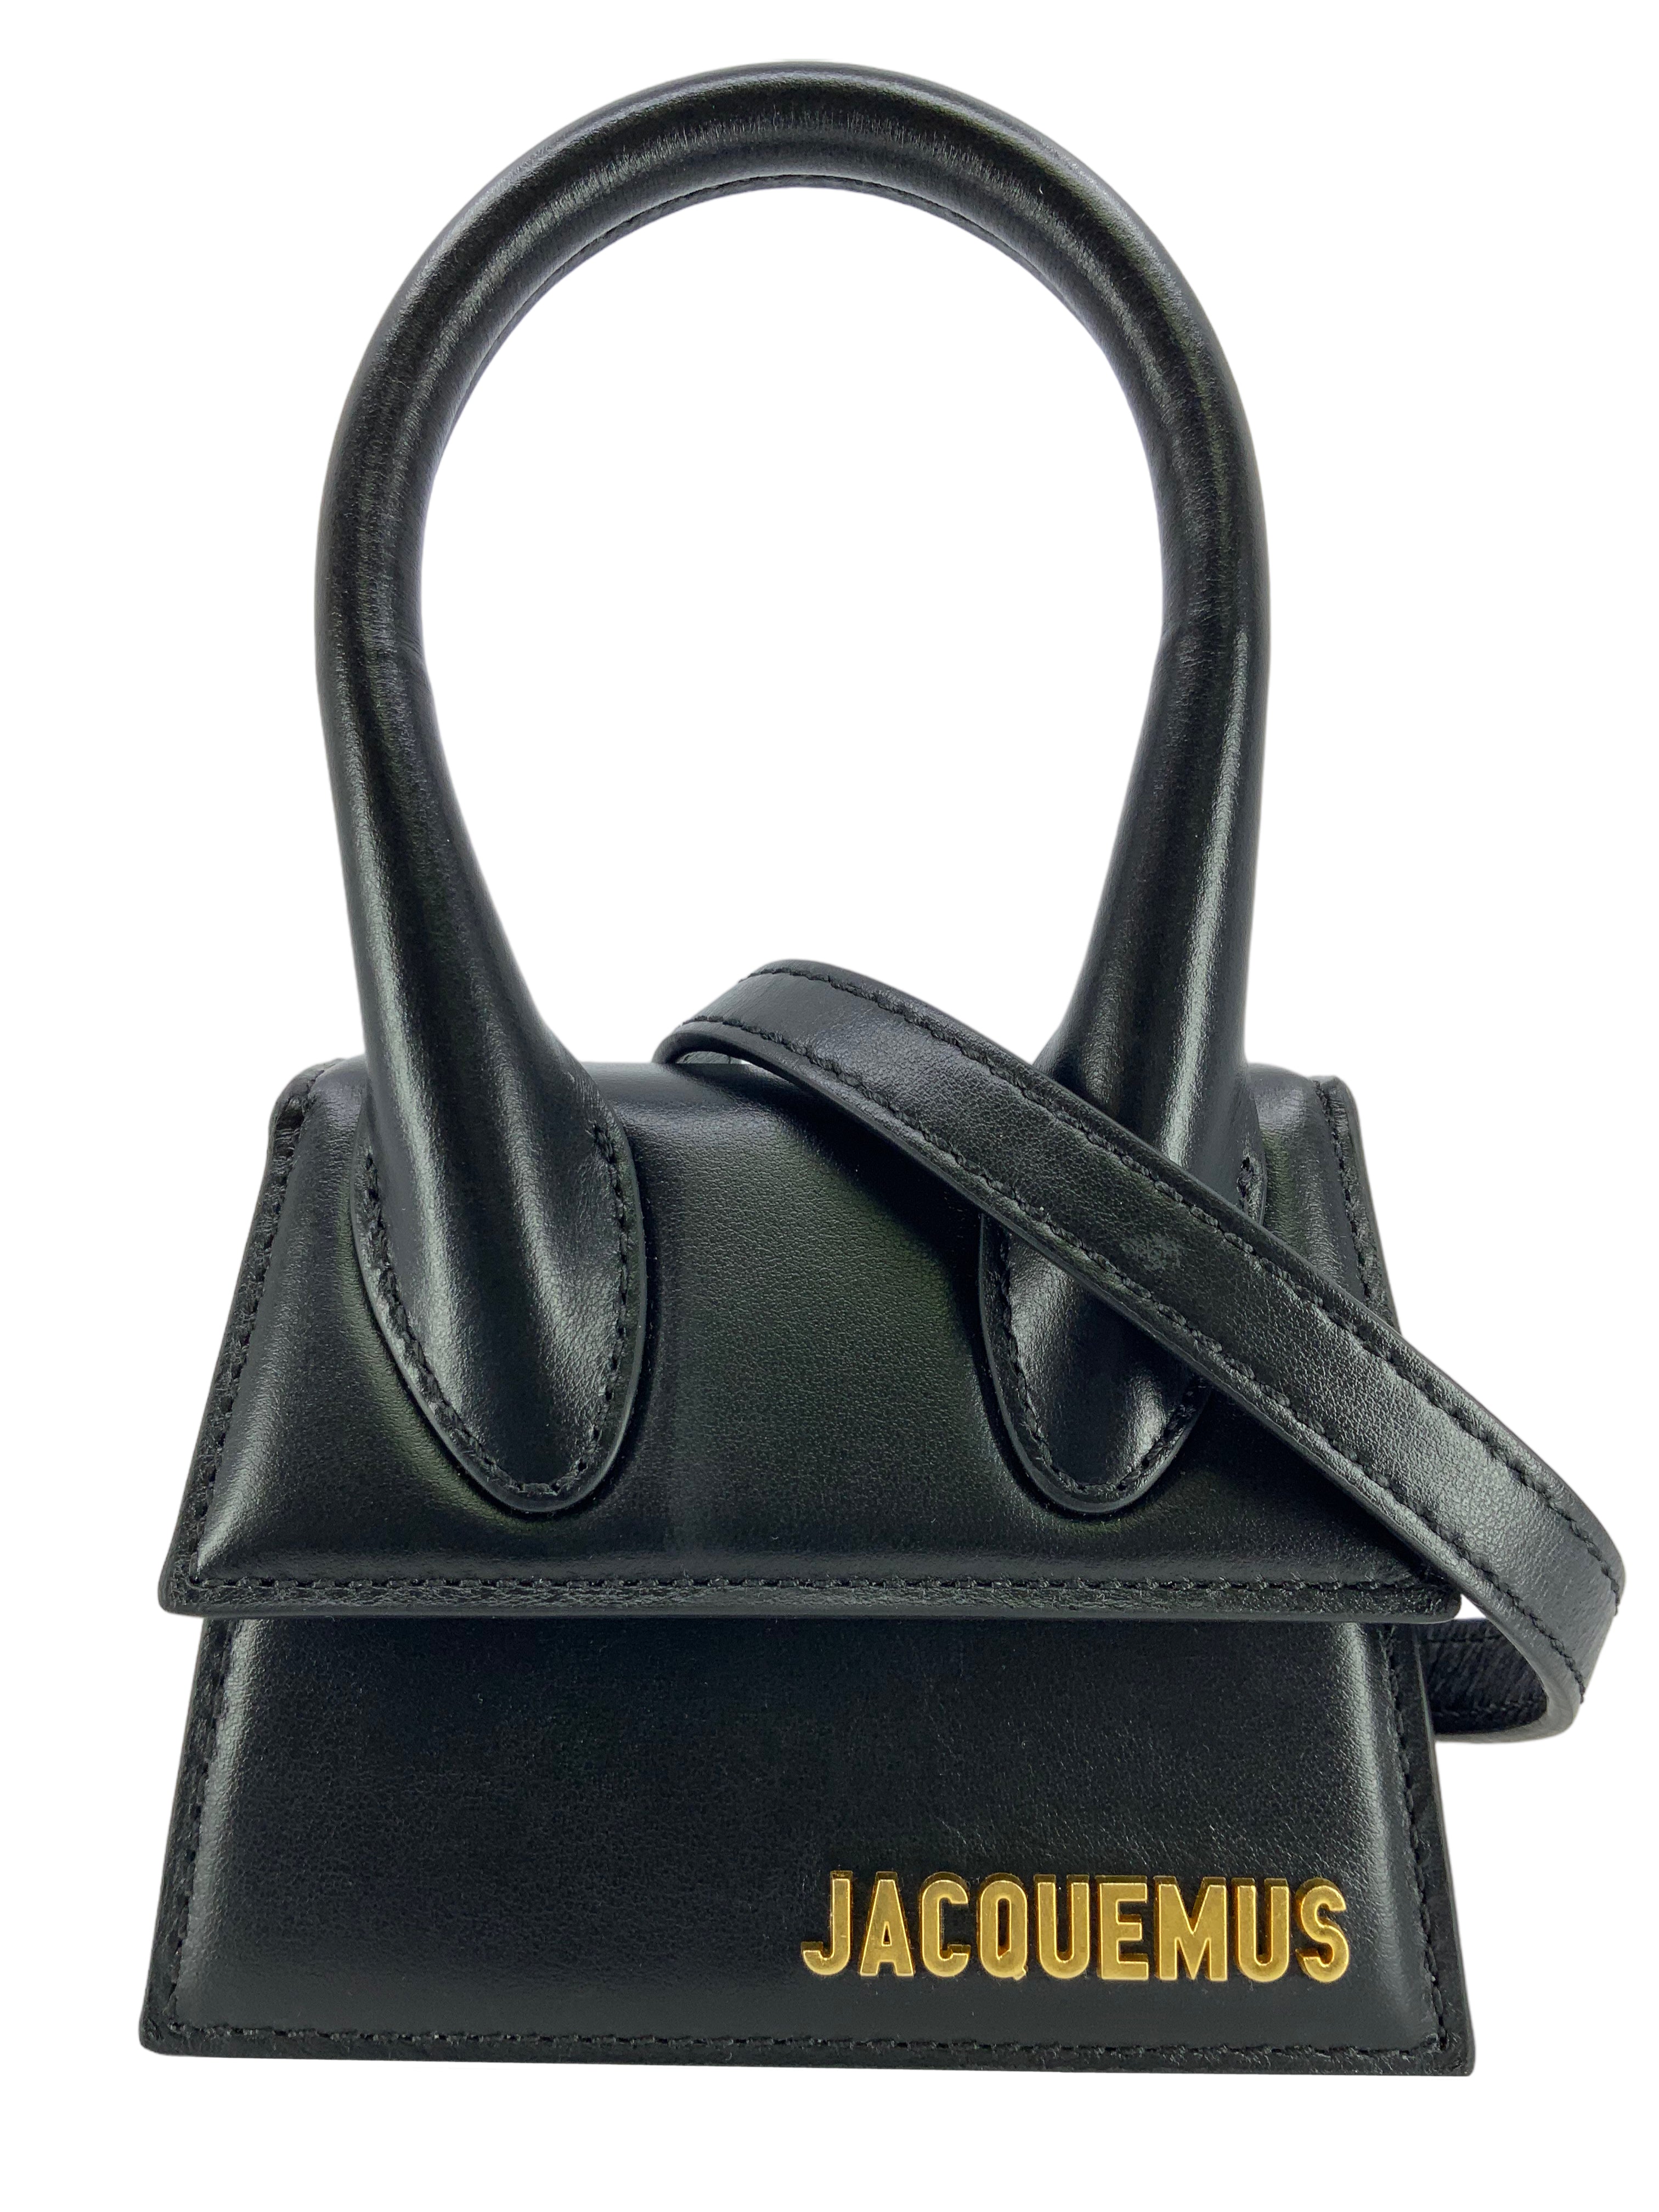 Le chiquito mini bag by Jacquemus